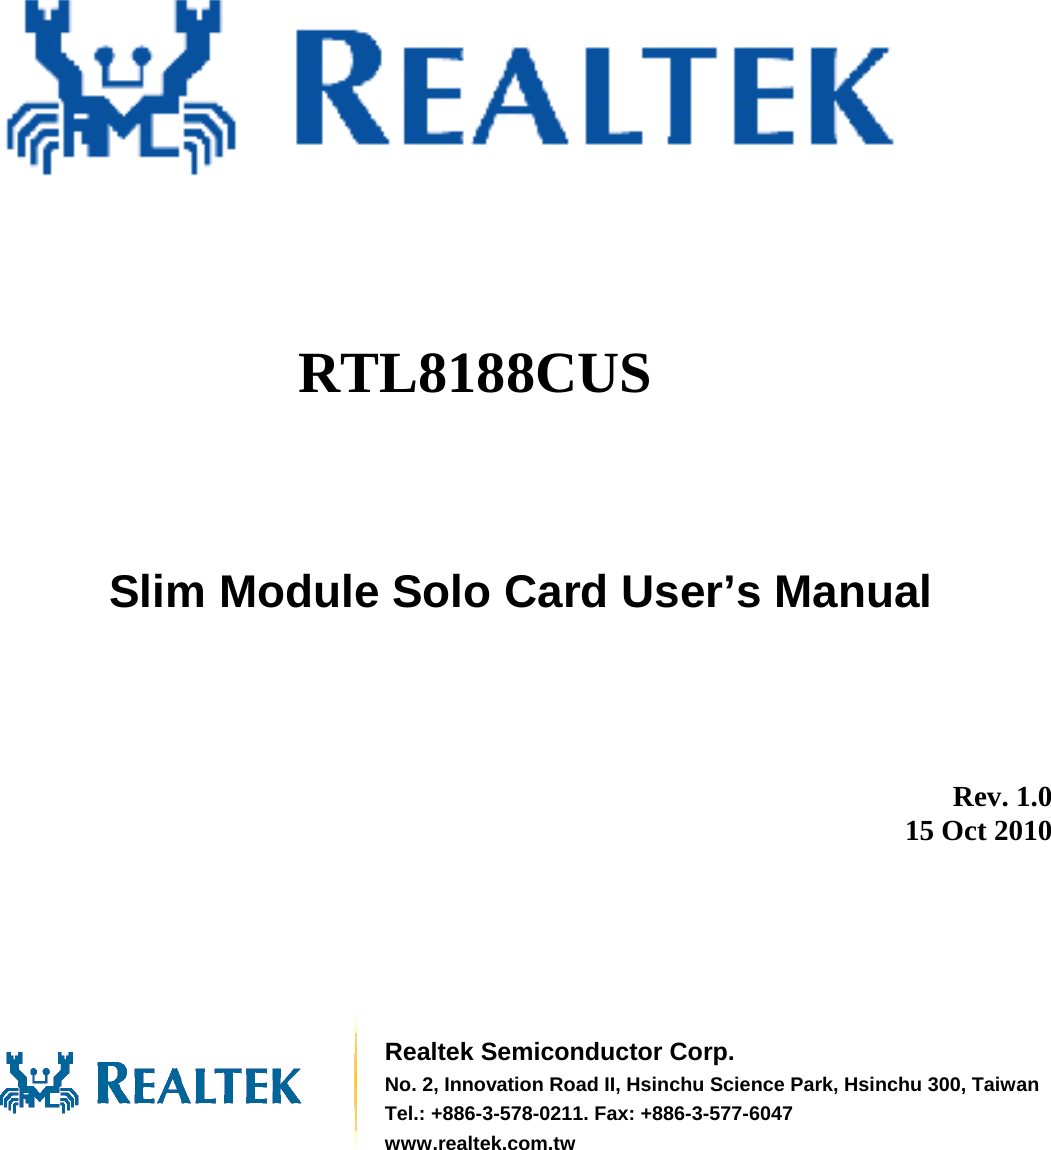               RTL8188CUS  Slim Module Solo Card User’s Manual          Rev. 1.0 15 Oct 2010        Realtek Semiconductor Corp. No. 2, Innovation Road II, Hsinchu Science Park, Hsinchu 300, TaiwanTel.: +886-3-578-0211. Fax: +886-3-577-6047 www.realtek.com.tw 